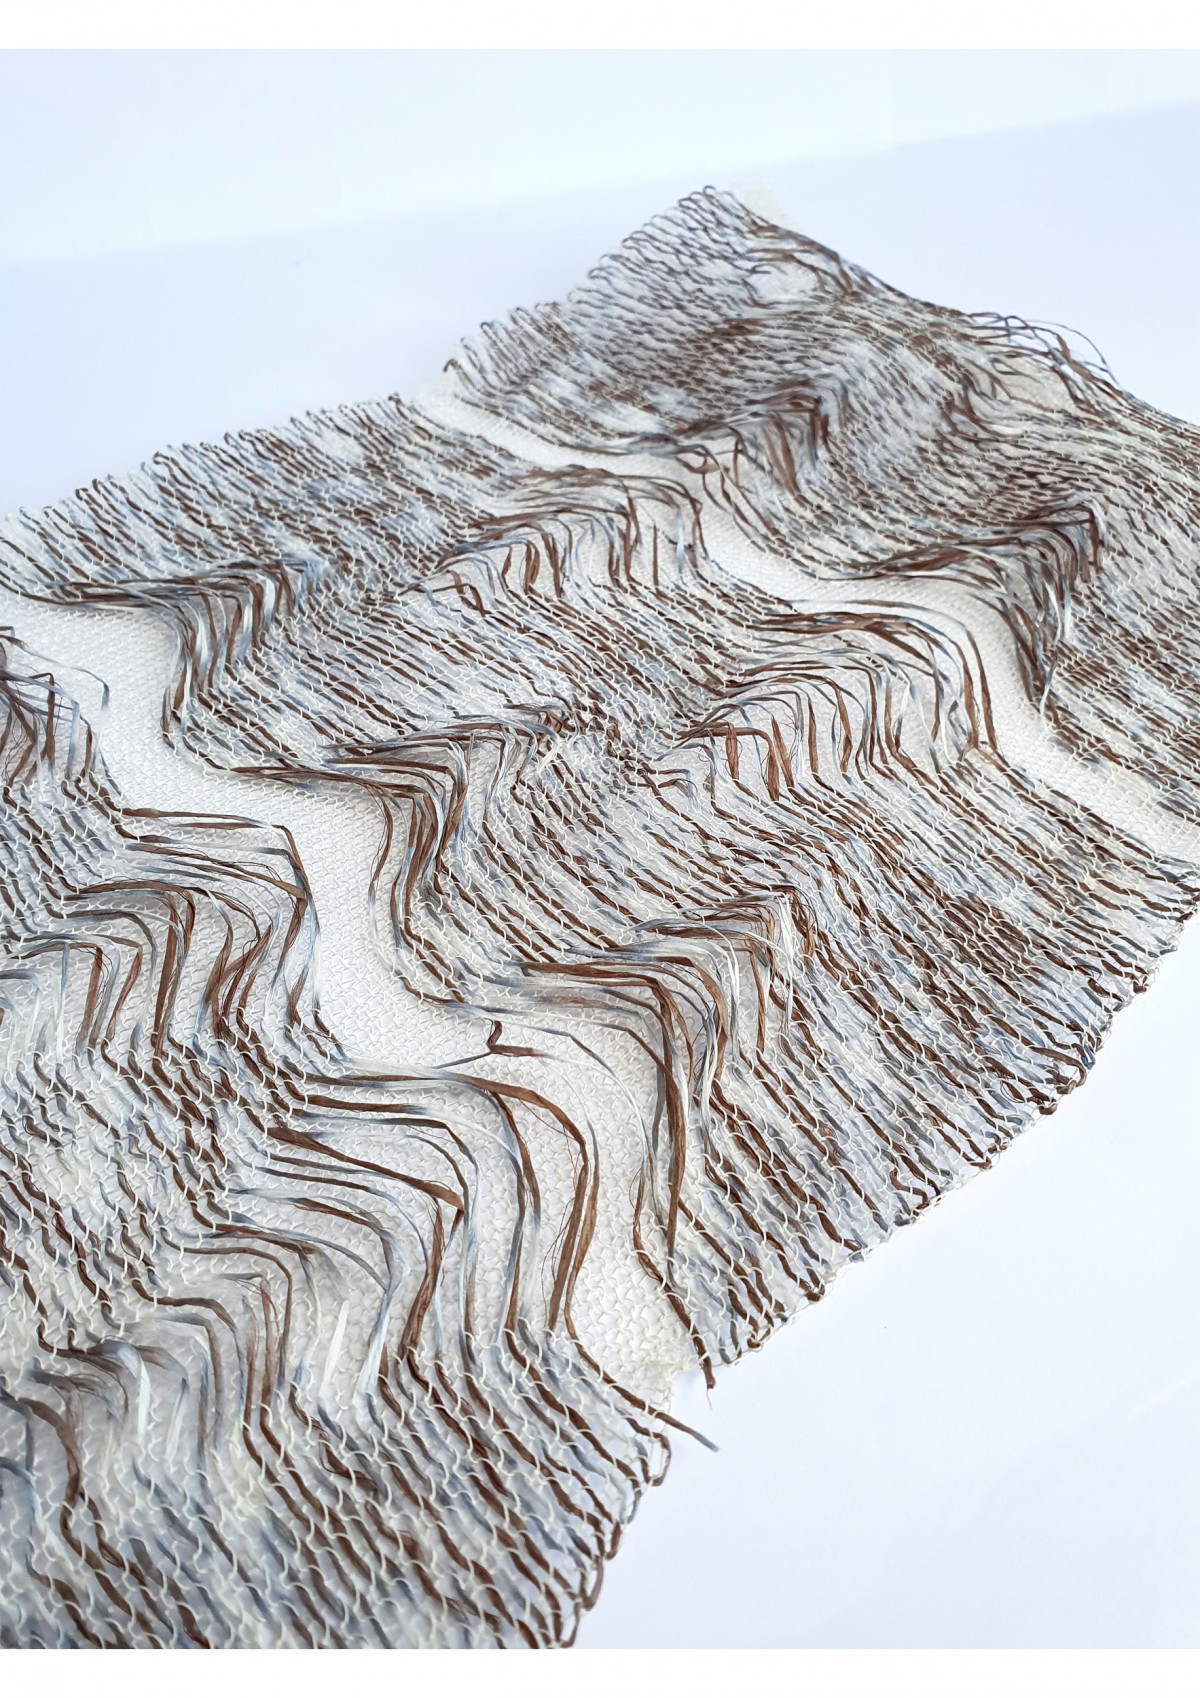 Logwood dyed silk paper pattern woven into fine paper knit